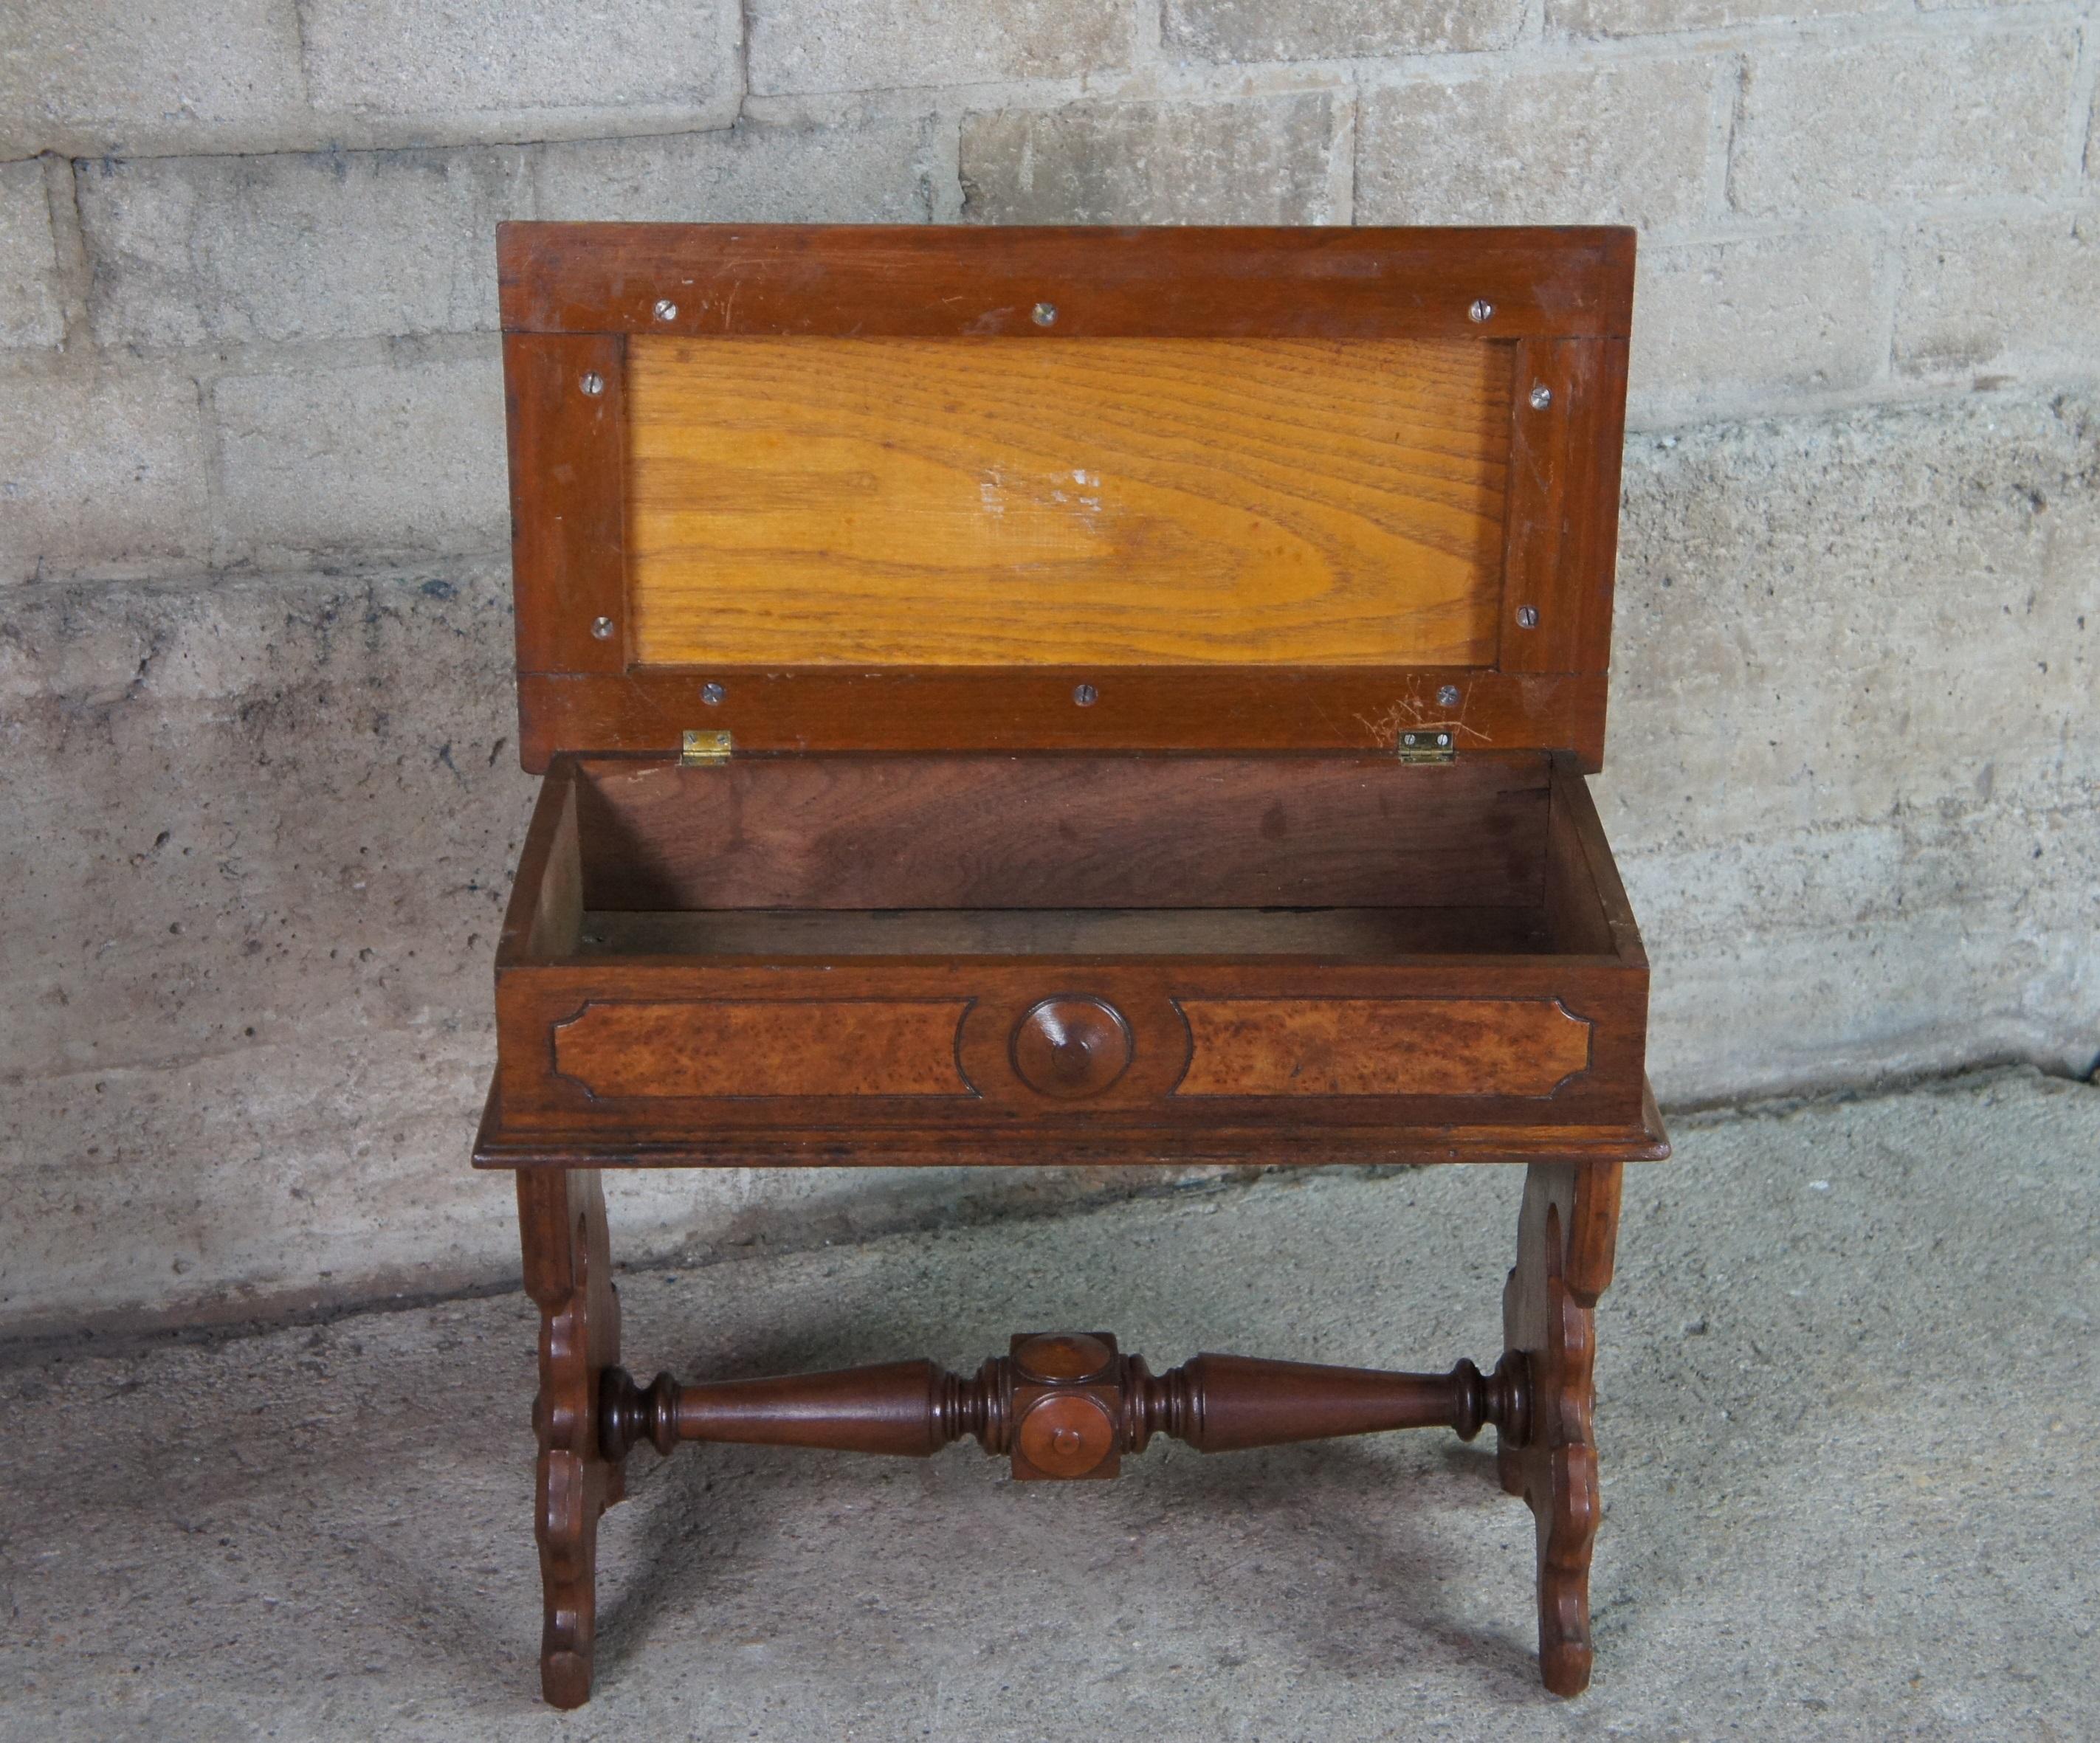 Upholstery Antique Eastlake Victorian Burl Walnut Flip Top Storage Piano Stool Bench Seat